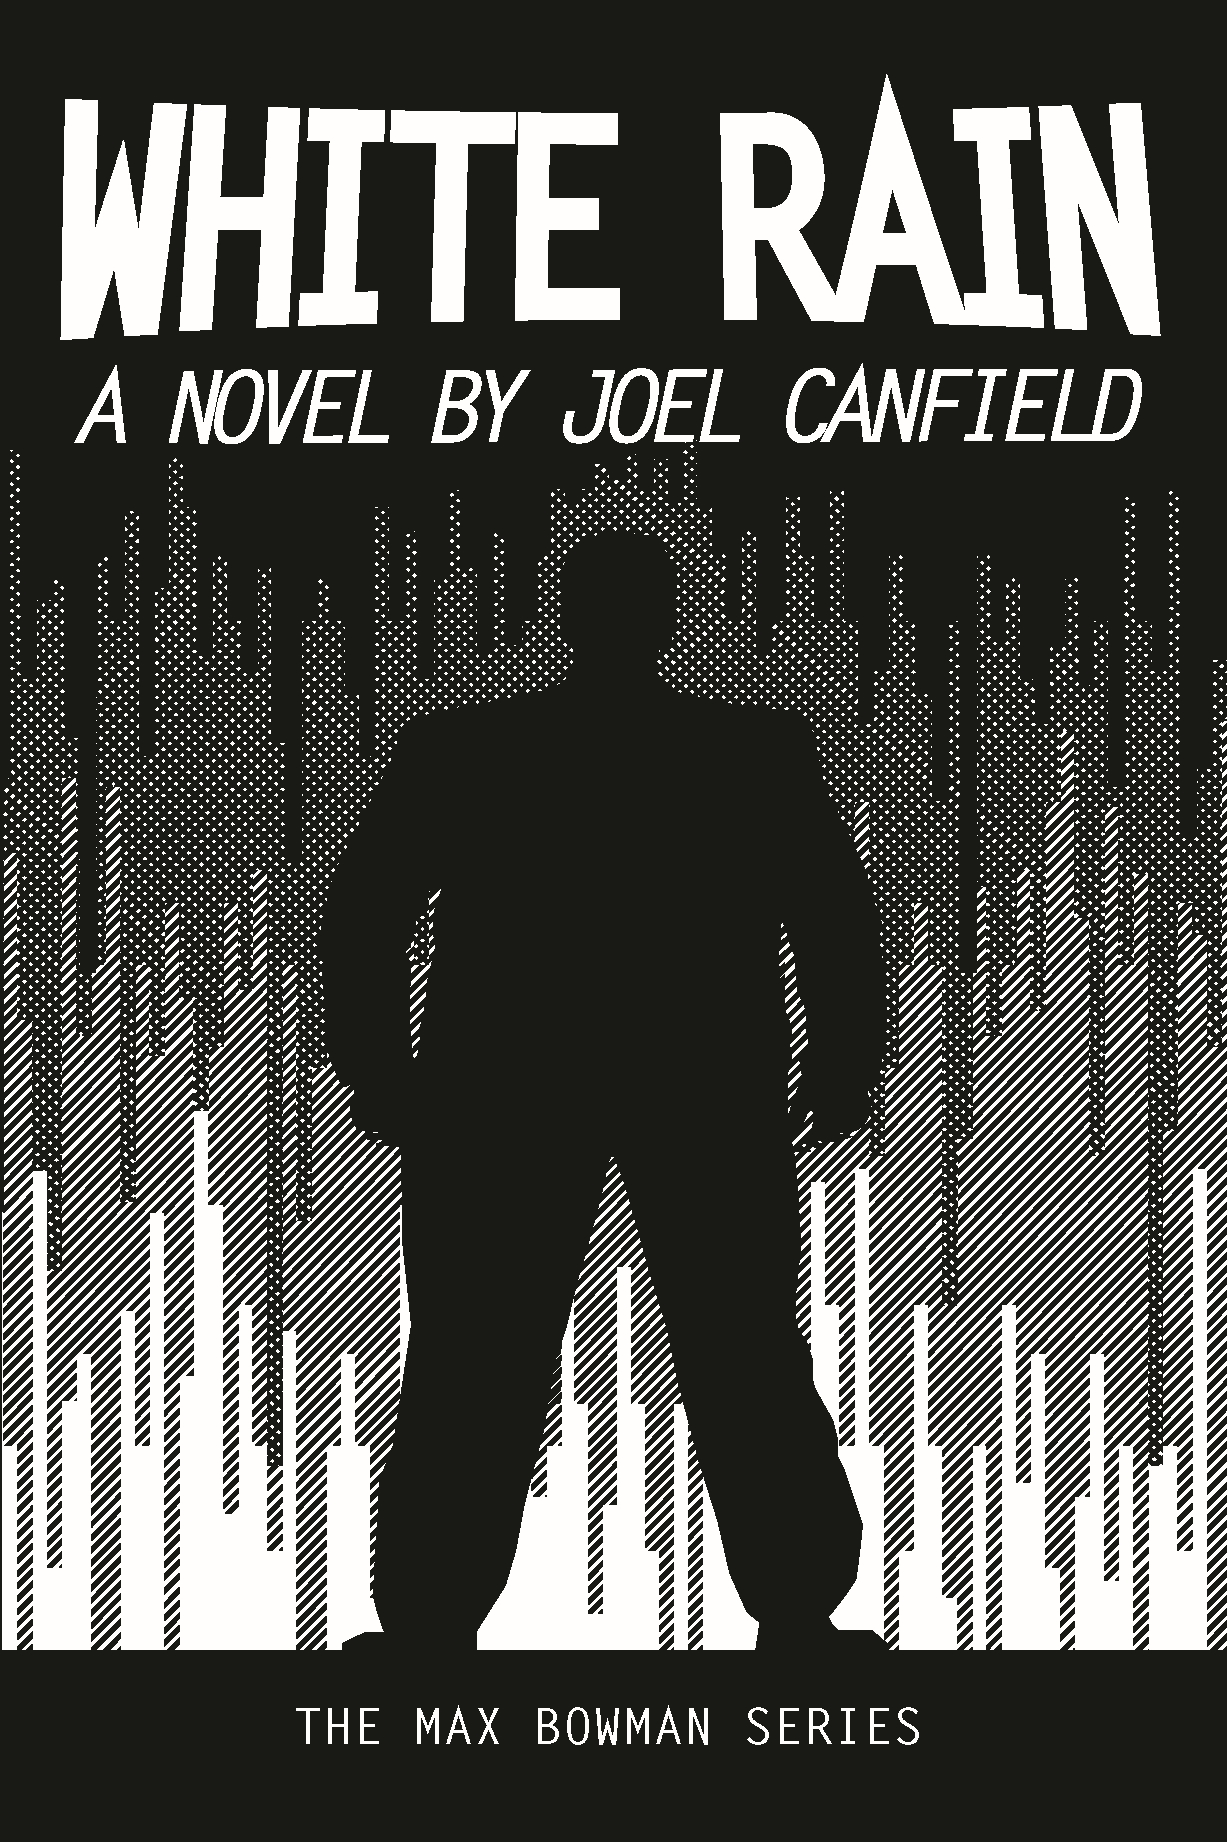 "White Rain," the Final Novel in the Award-Winning Max Bowman Series by Joel Canfield